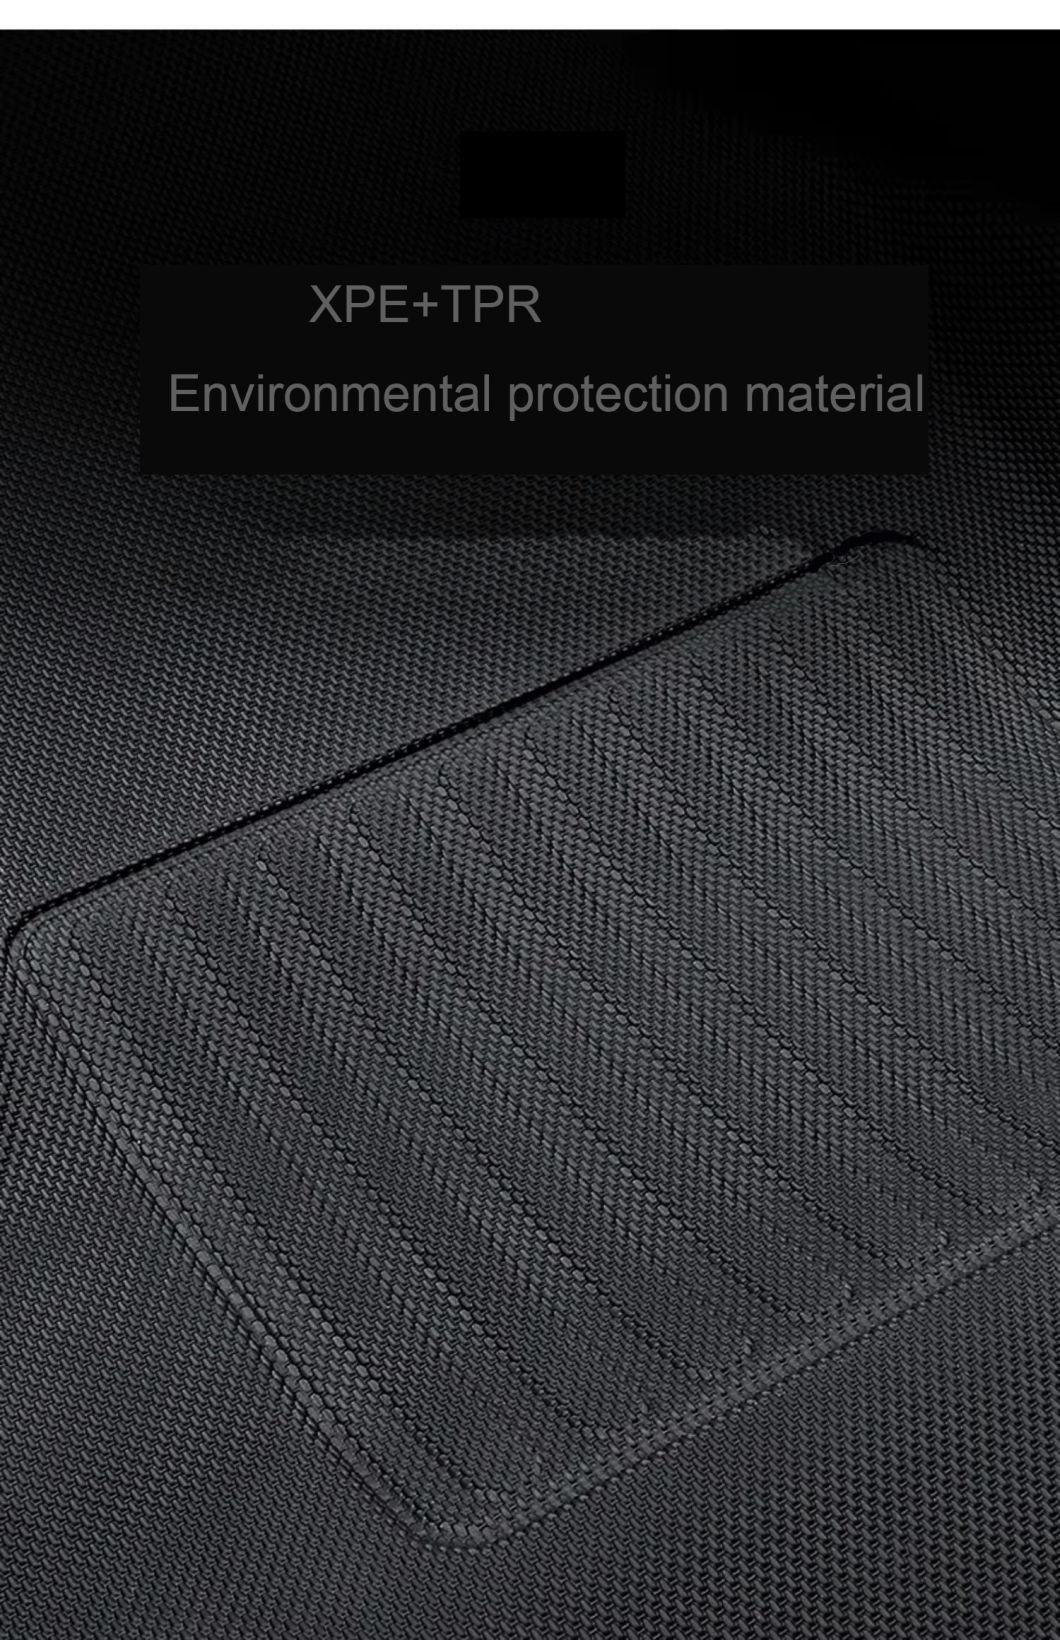 Factory Big Promotion Durable Protector Waterproof 5D TPE Leather Car Foot Carpet Floor Mat Car Mats